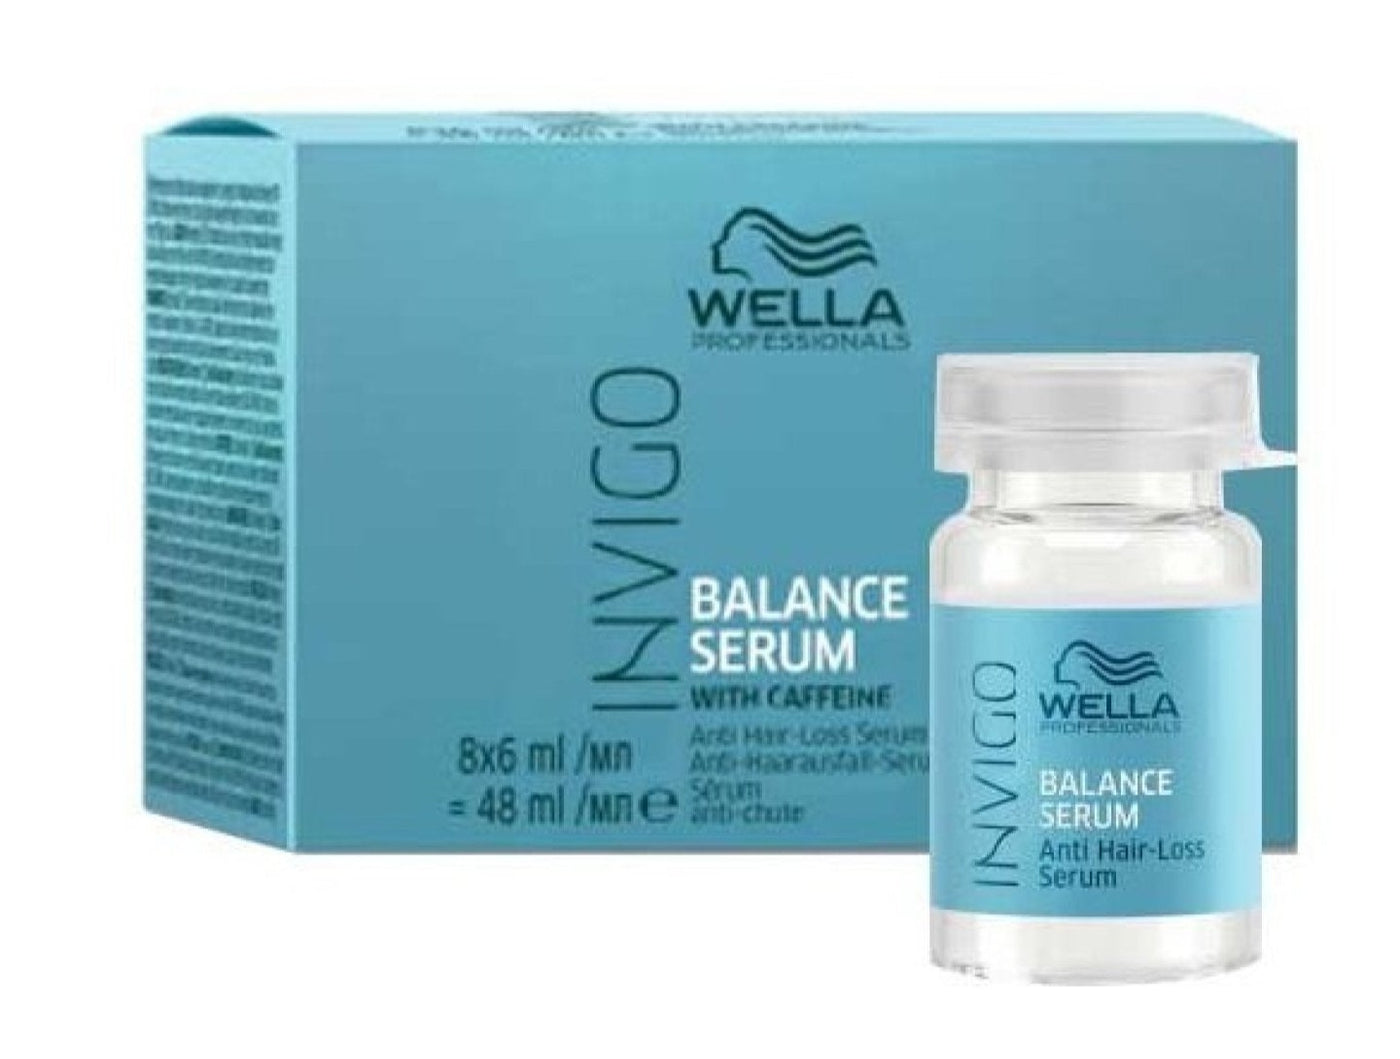 Wella Balance Invigo Anti Hair Loss Serum 8X6ml - Salon Warehouse